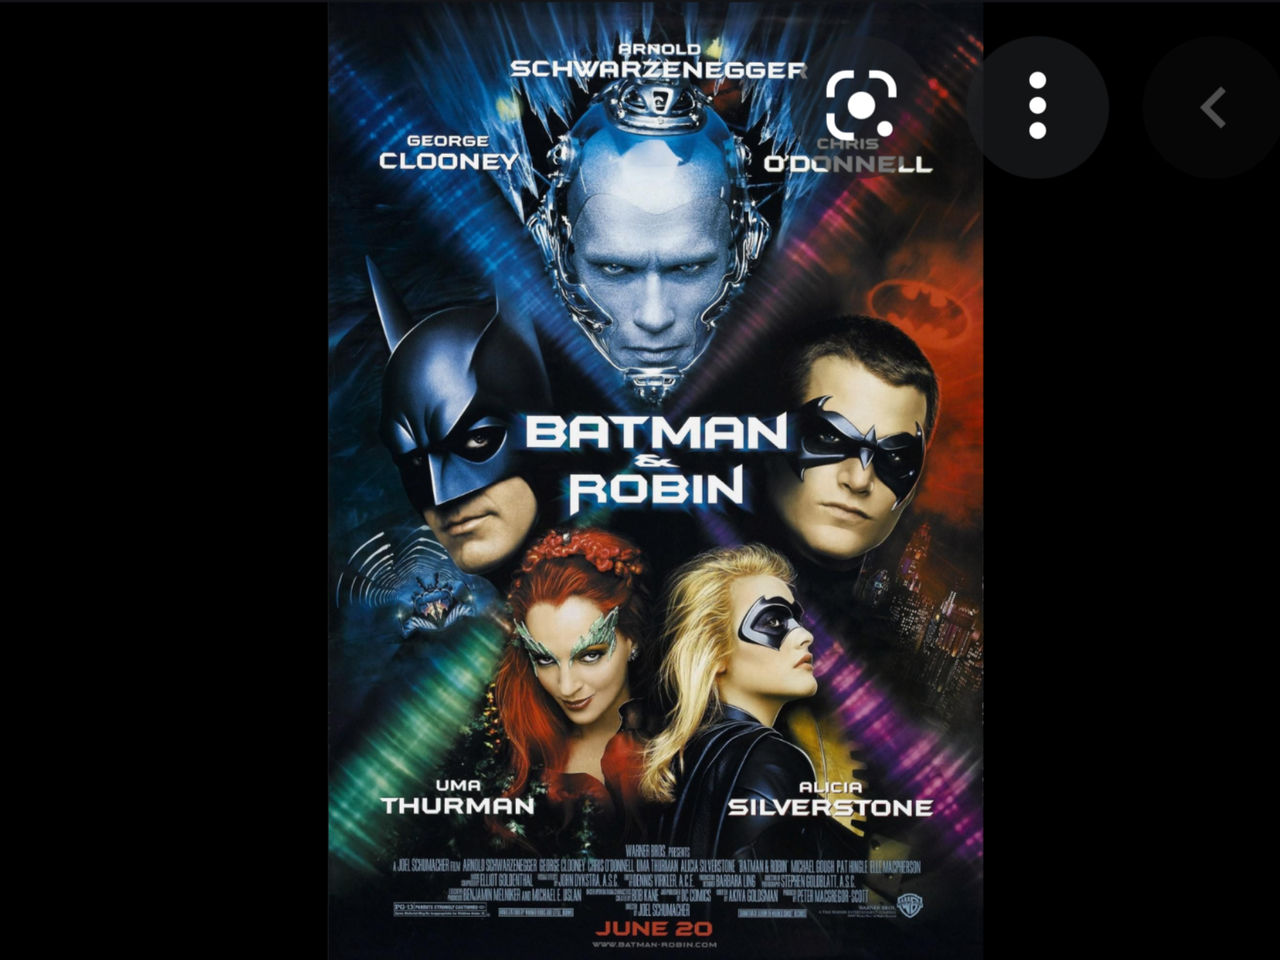 1997 movie poster of Batman and robin by allythegreat1 on DeviantArt